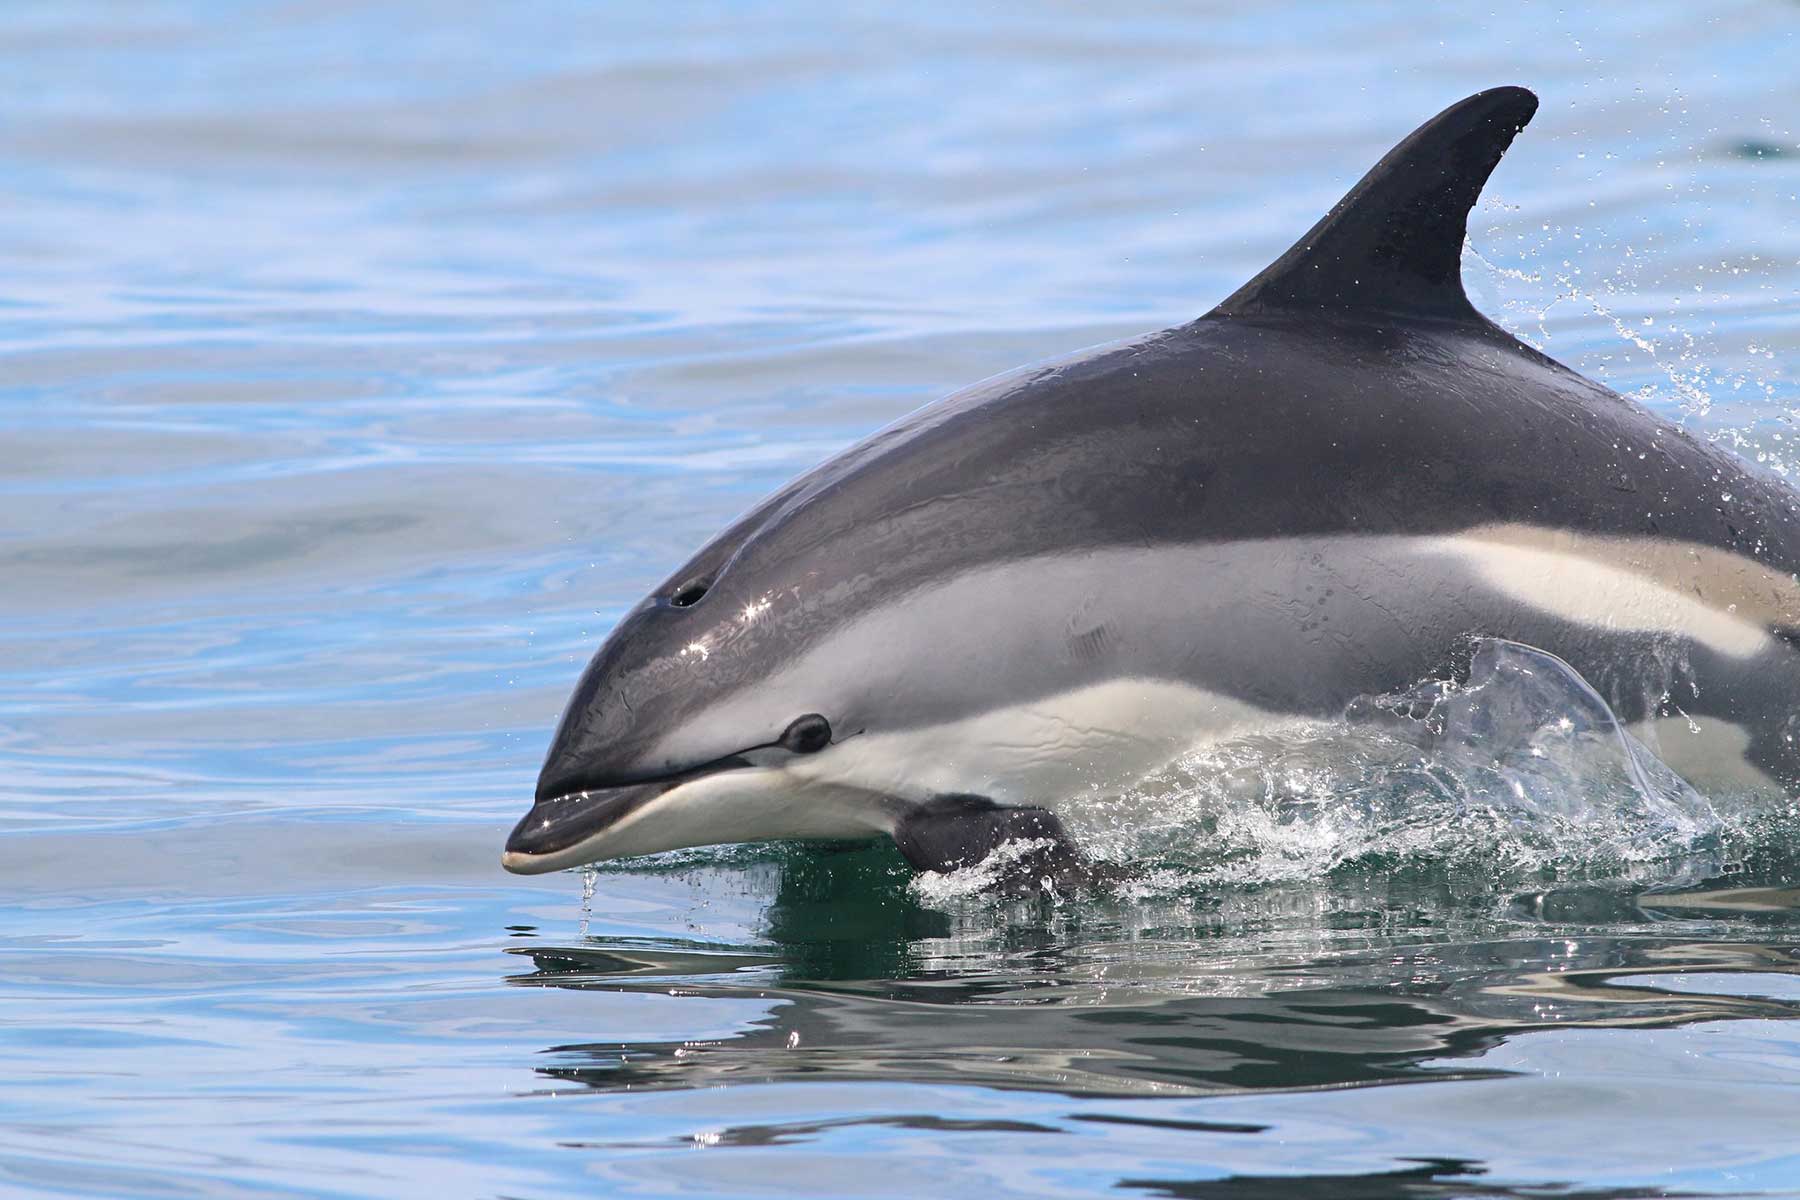 1428 dolphins killed in the Faroe Islands